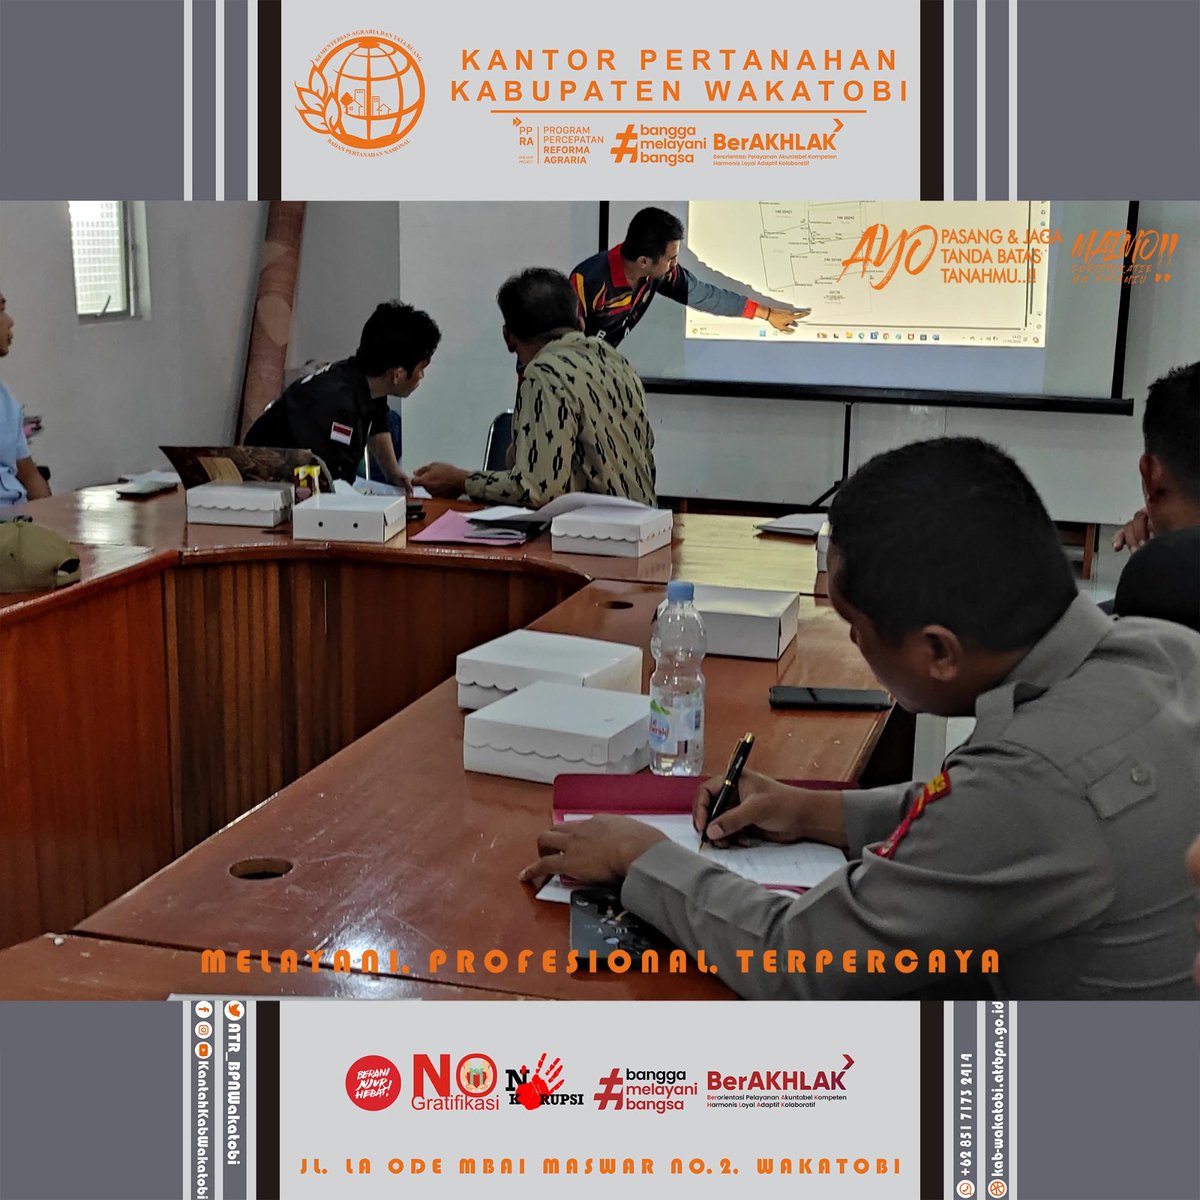 Halo #SobATRBPN Wakatobi,

Kantor Pertanahan Kabupaten Wakatobi mengadakan kegiatan ekspos hasil pengambilan data lapang sengketa bidang tanah masyarakat di kelurahan Wandoka Selatan.